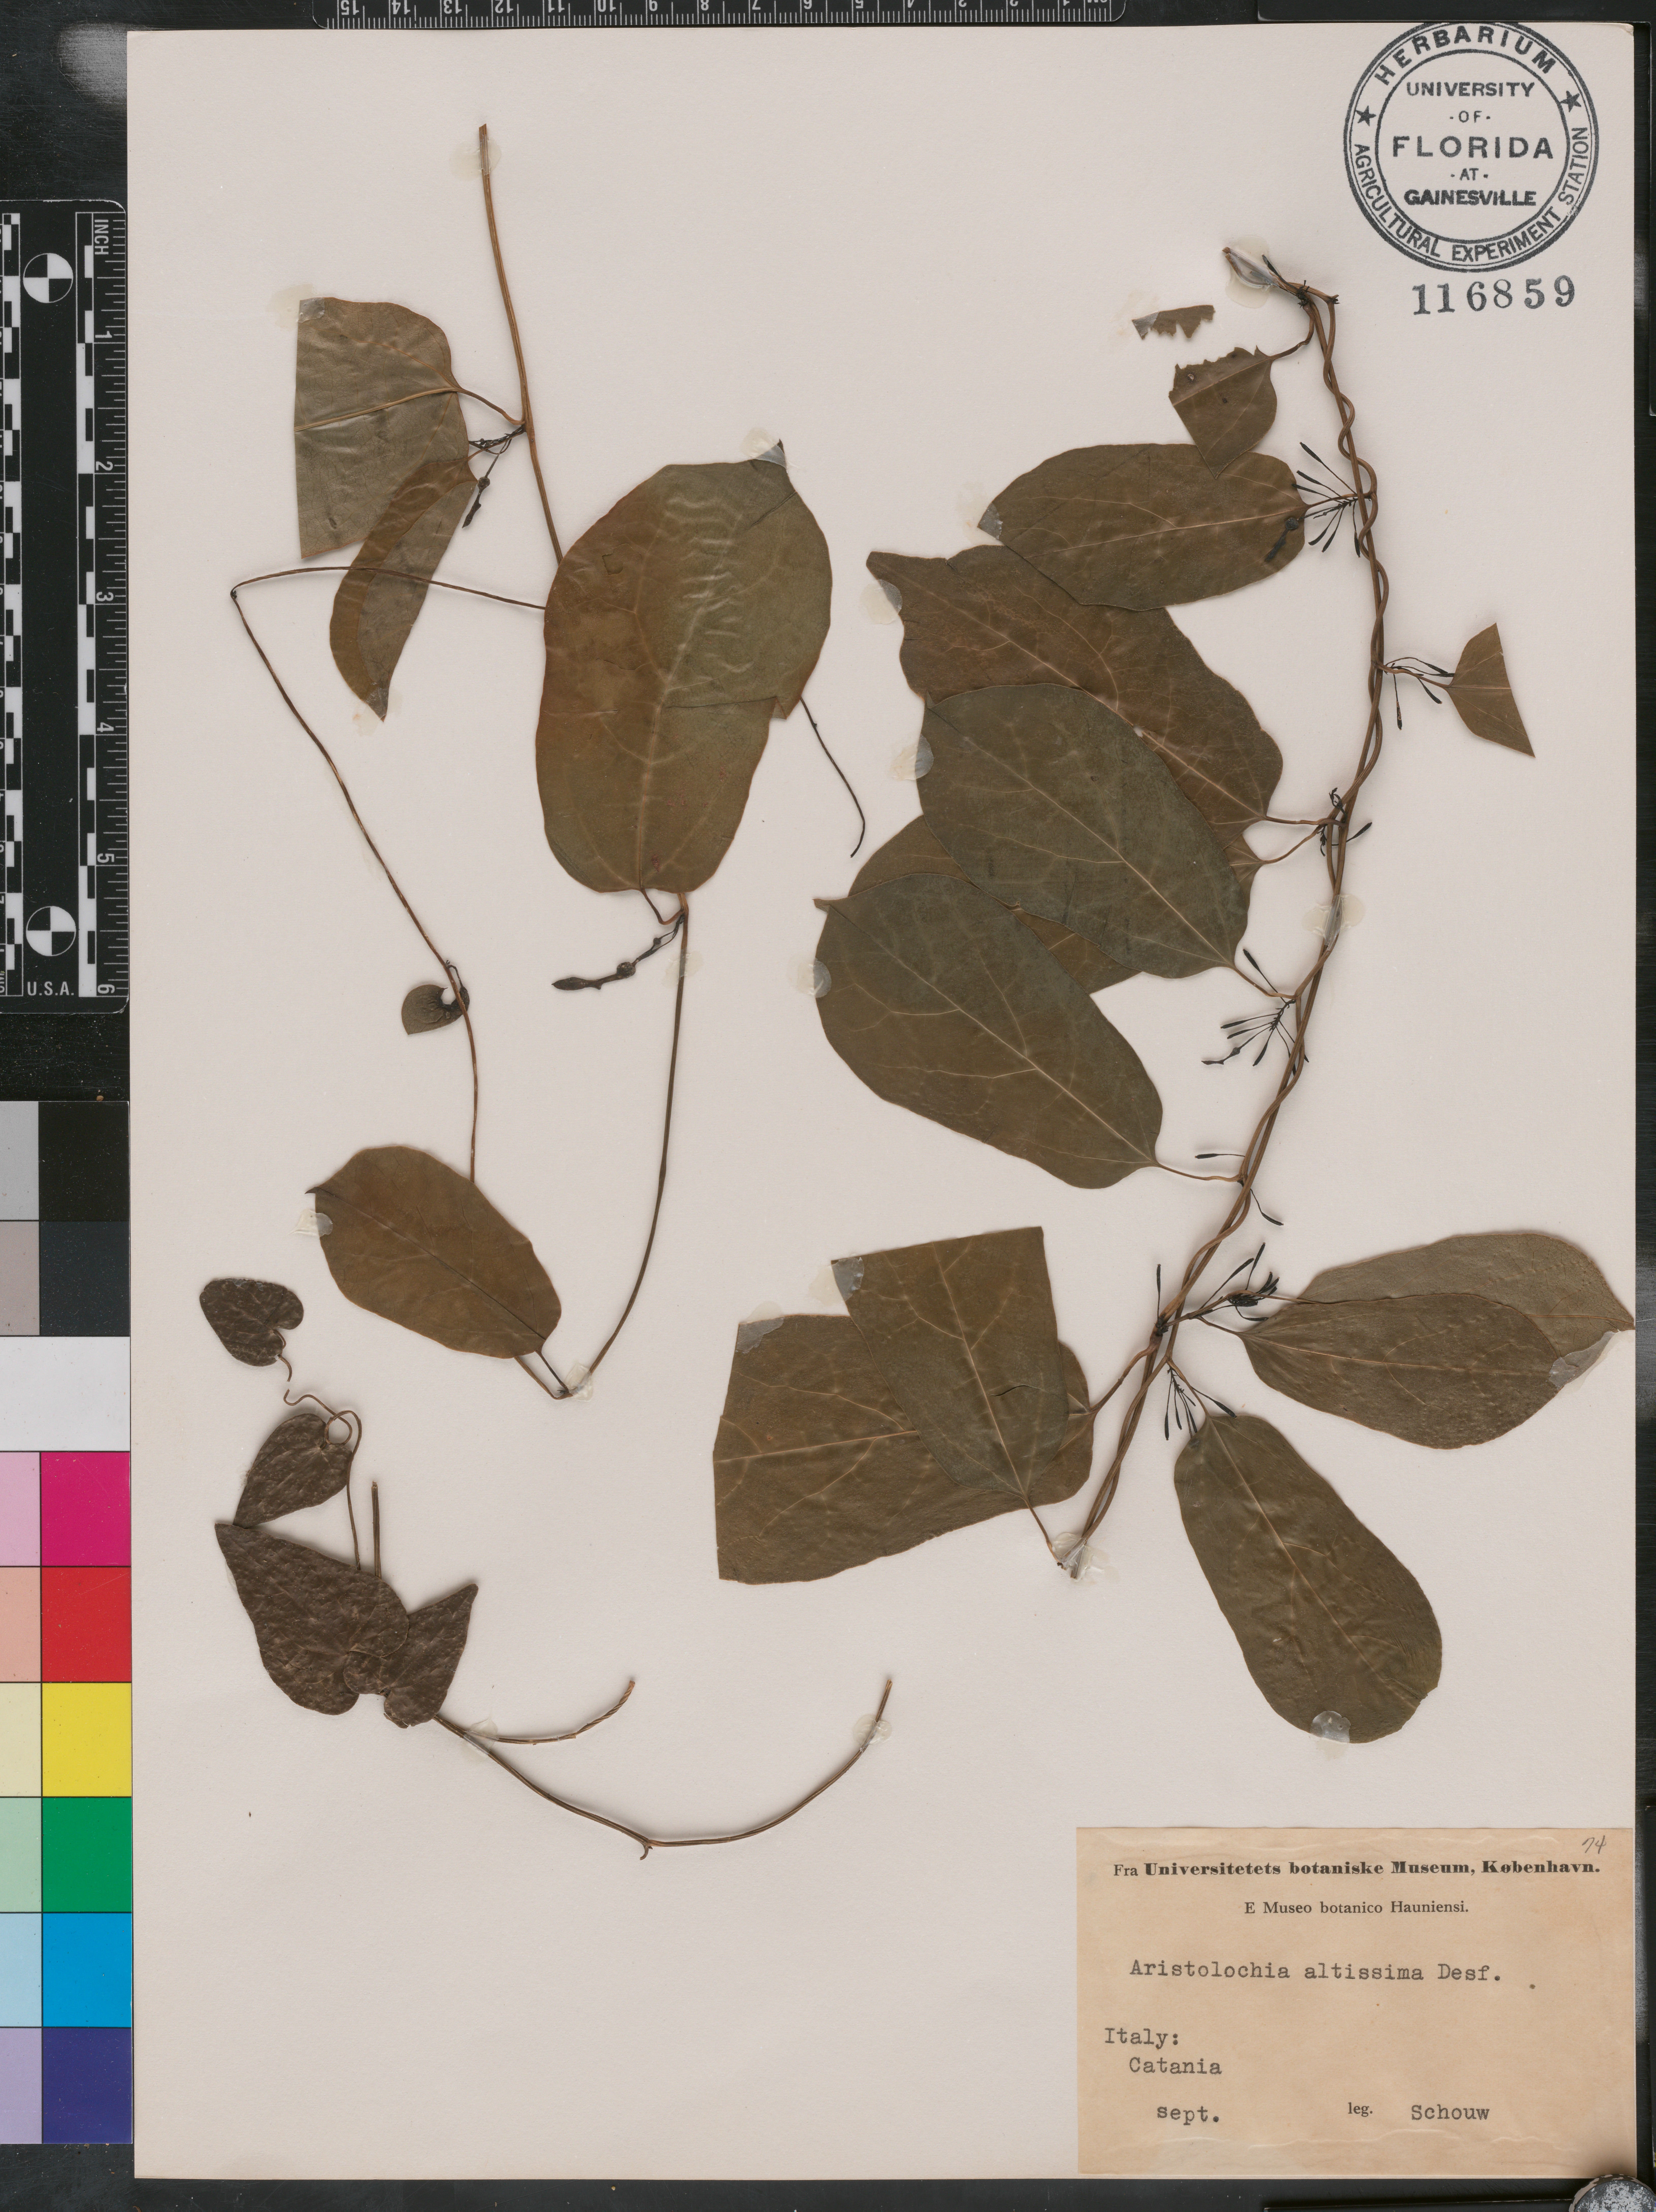 Aristolochia sempervirens image